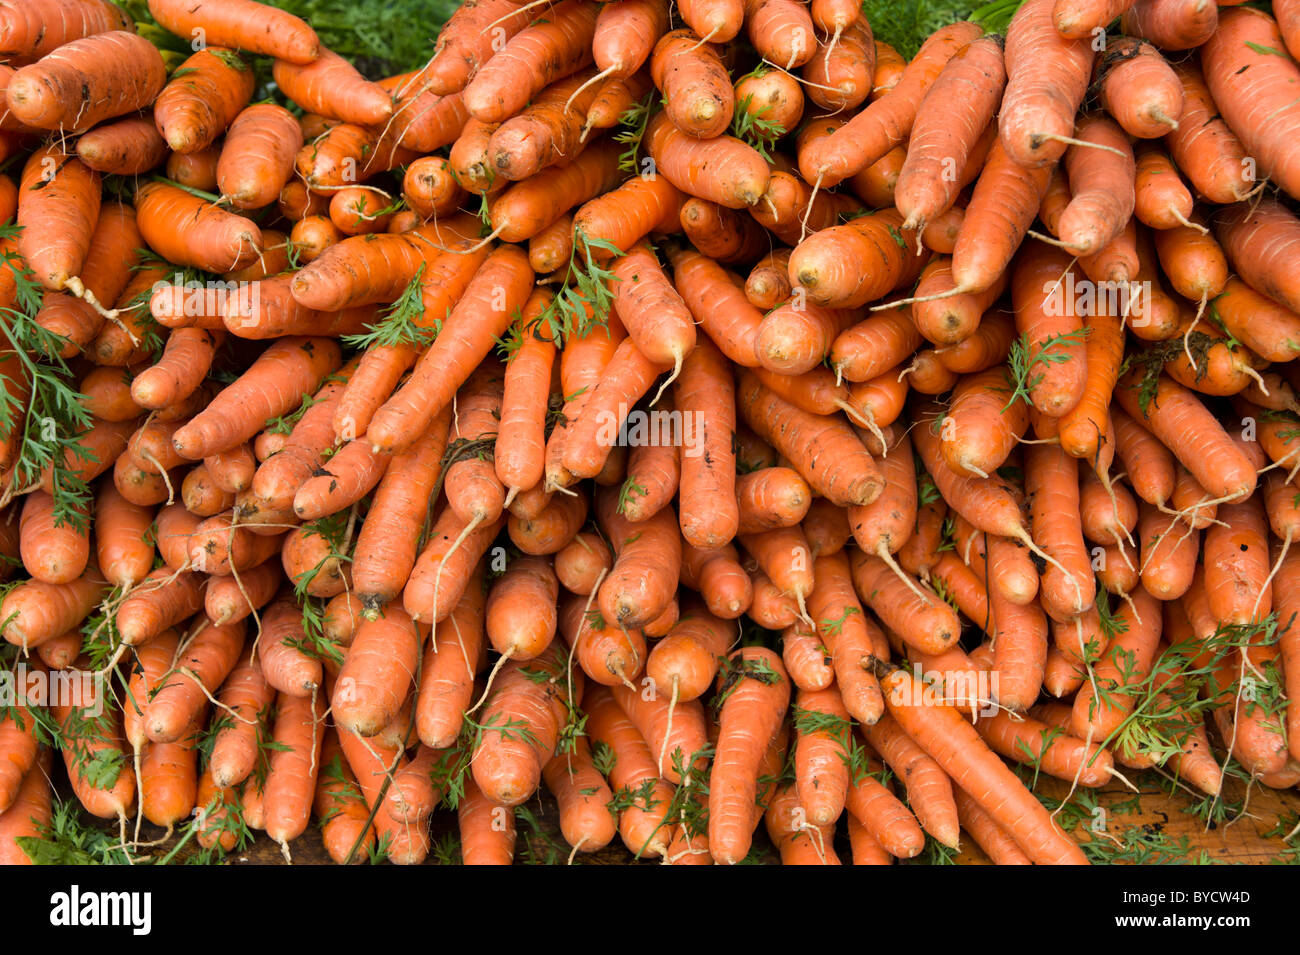 Carrots on vegetable market stall Stock Photo